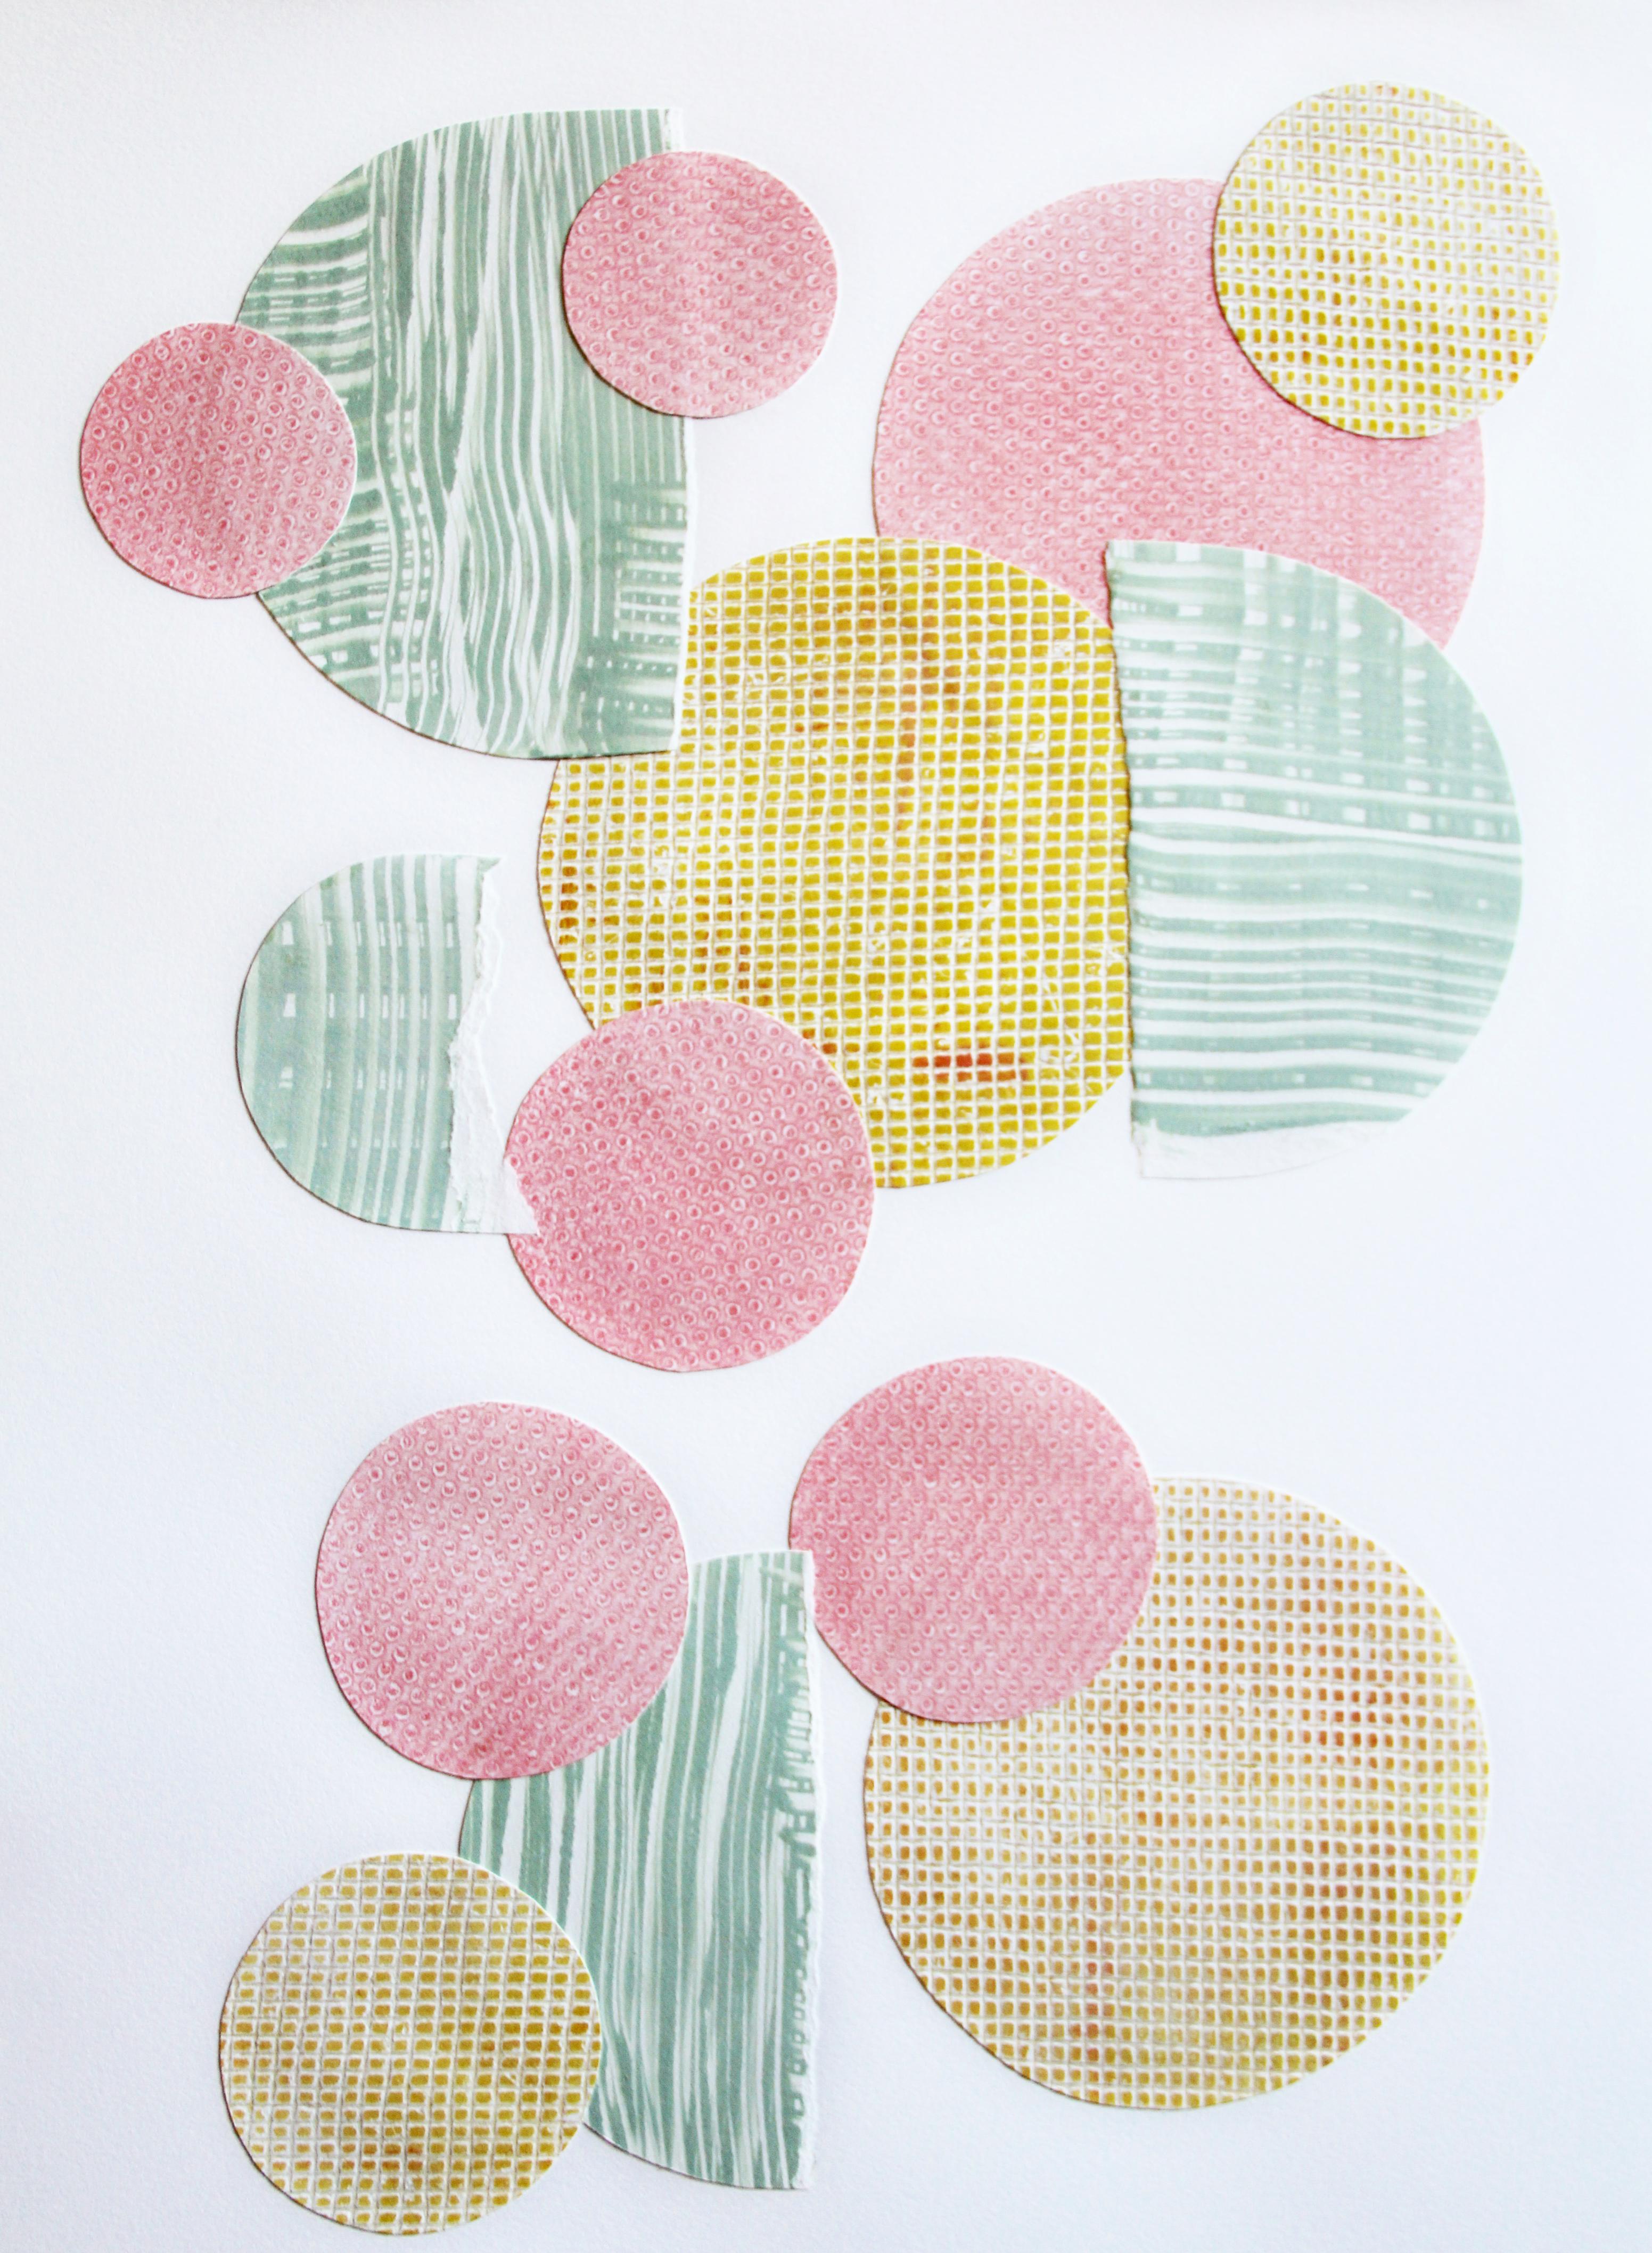 Pink Pastels - Abstract Art by Sarah Sczepanski